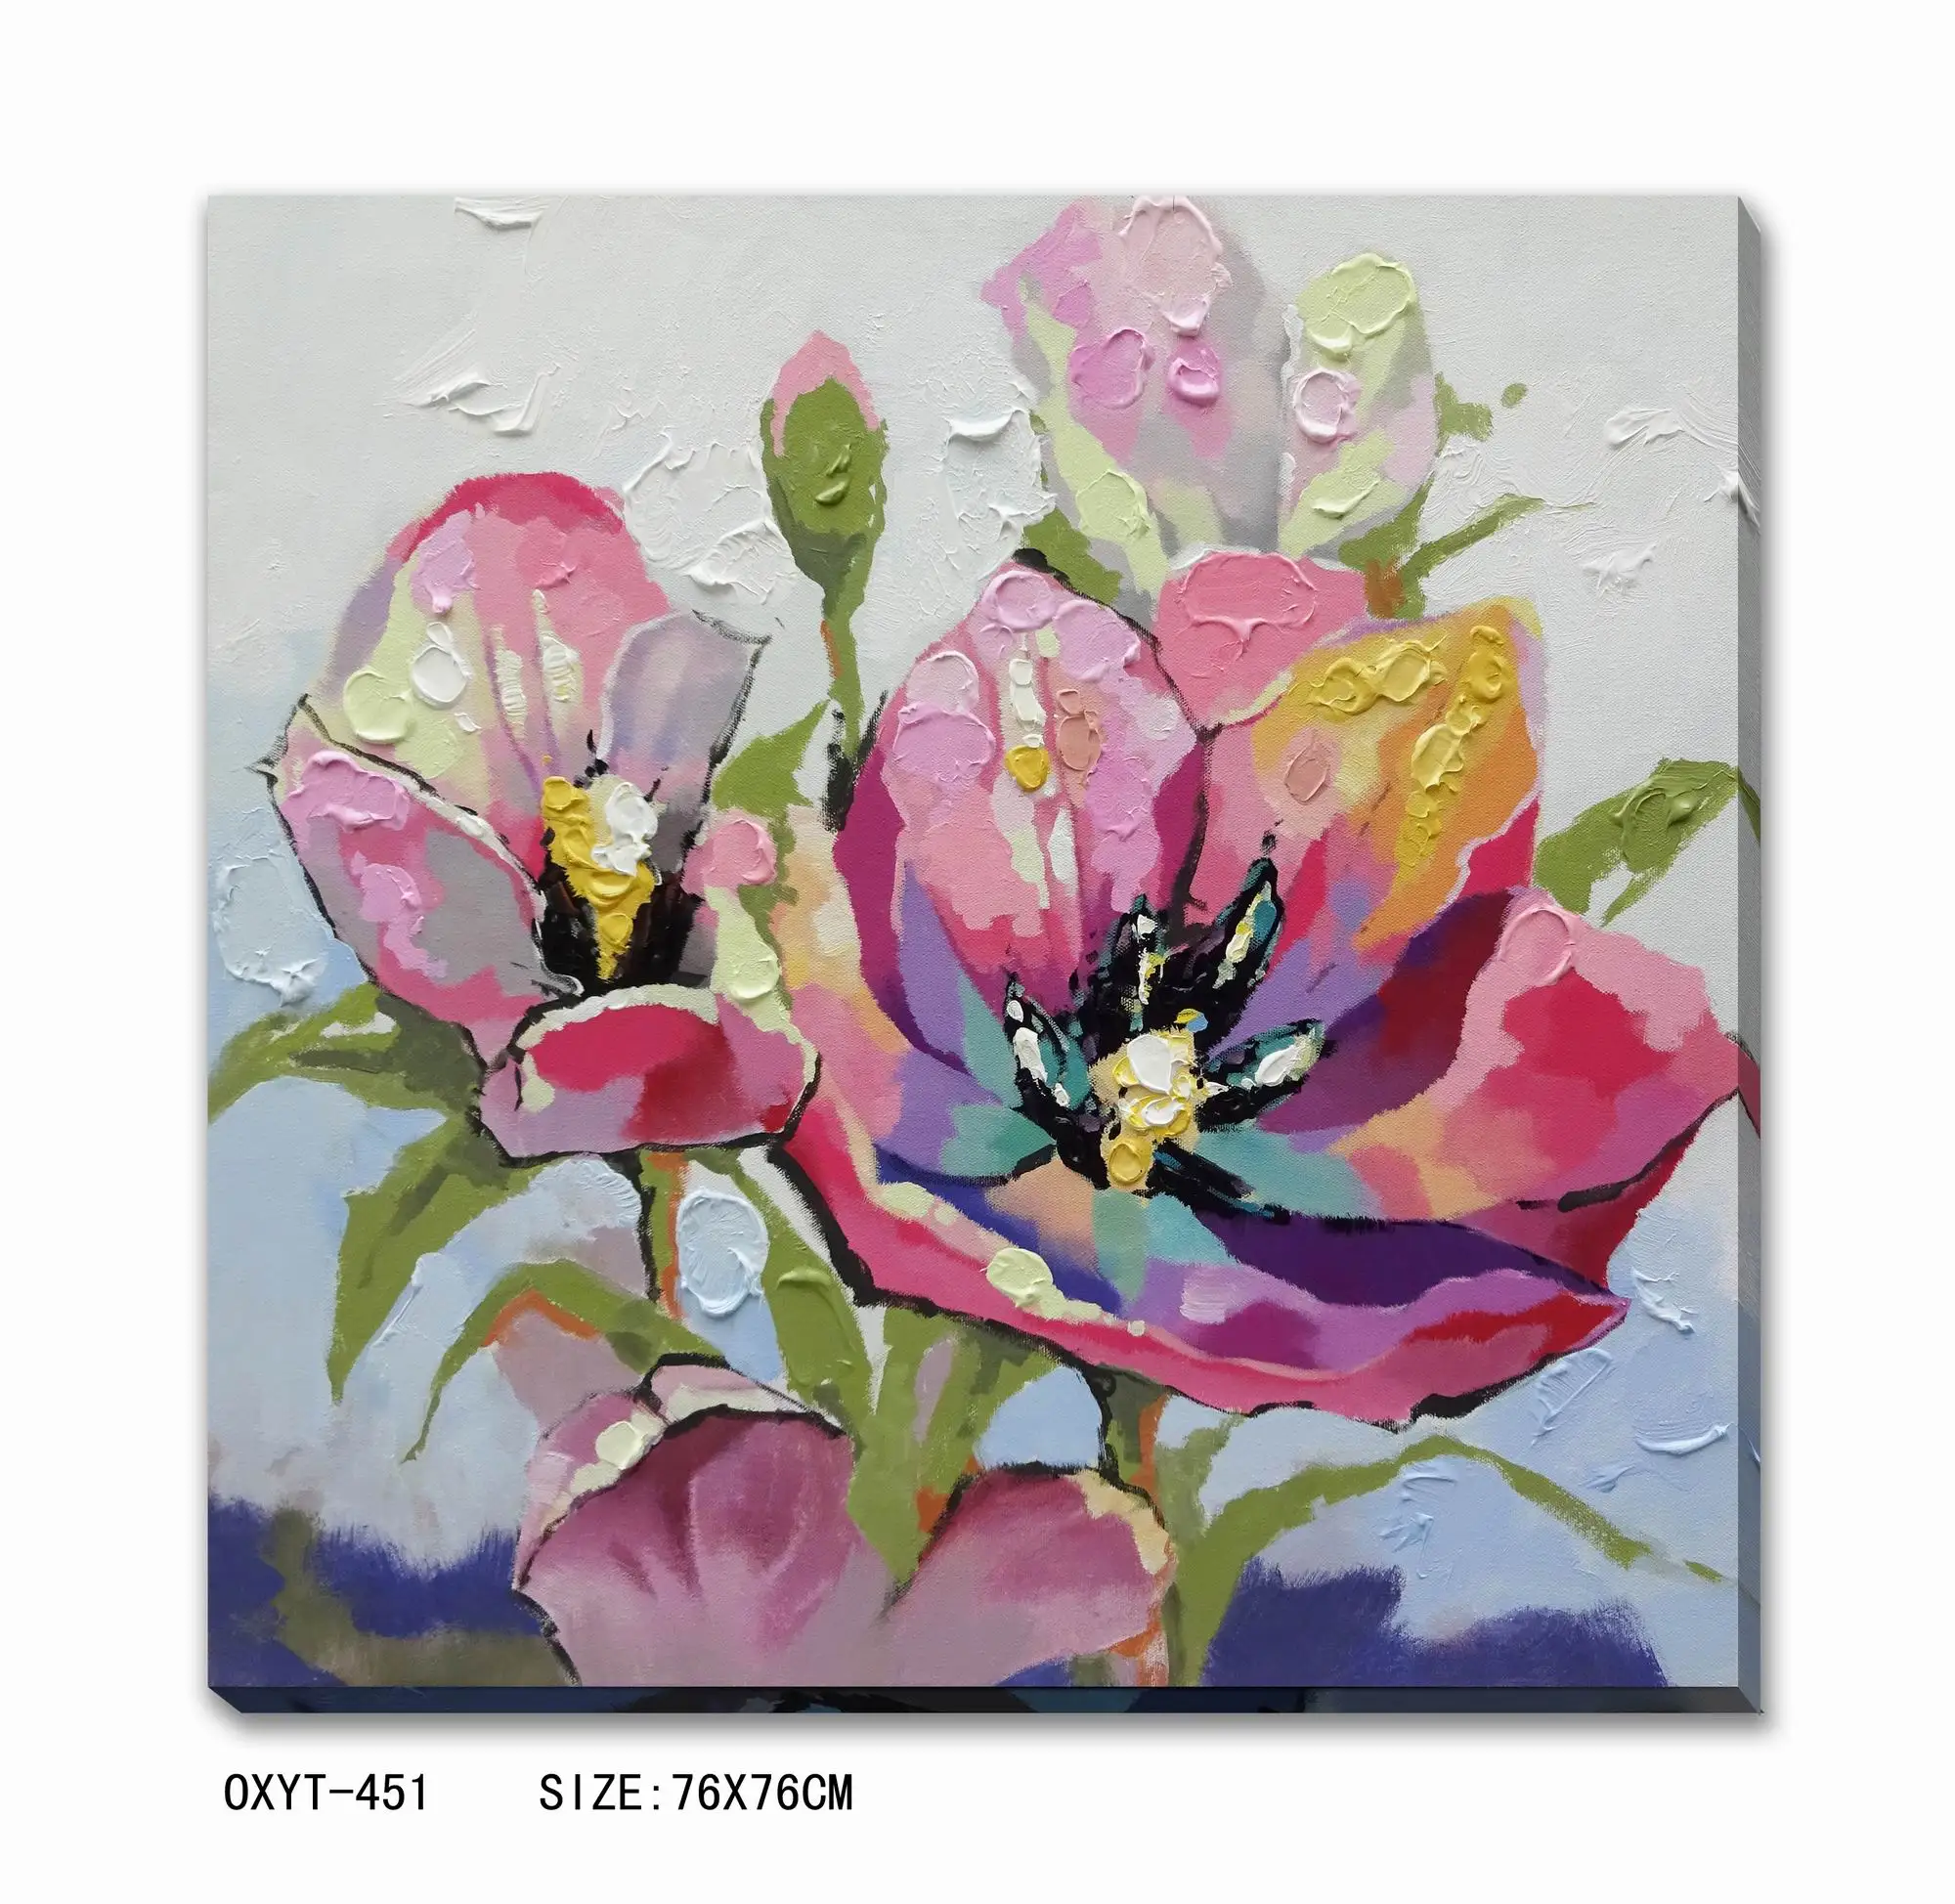 Modern Original Abstract Flower Canvas Wall Art Oil Painting Buy Abstract Art Oil Painting Oil Painting Flower Original Abstract Painting Product On Alibaba Com